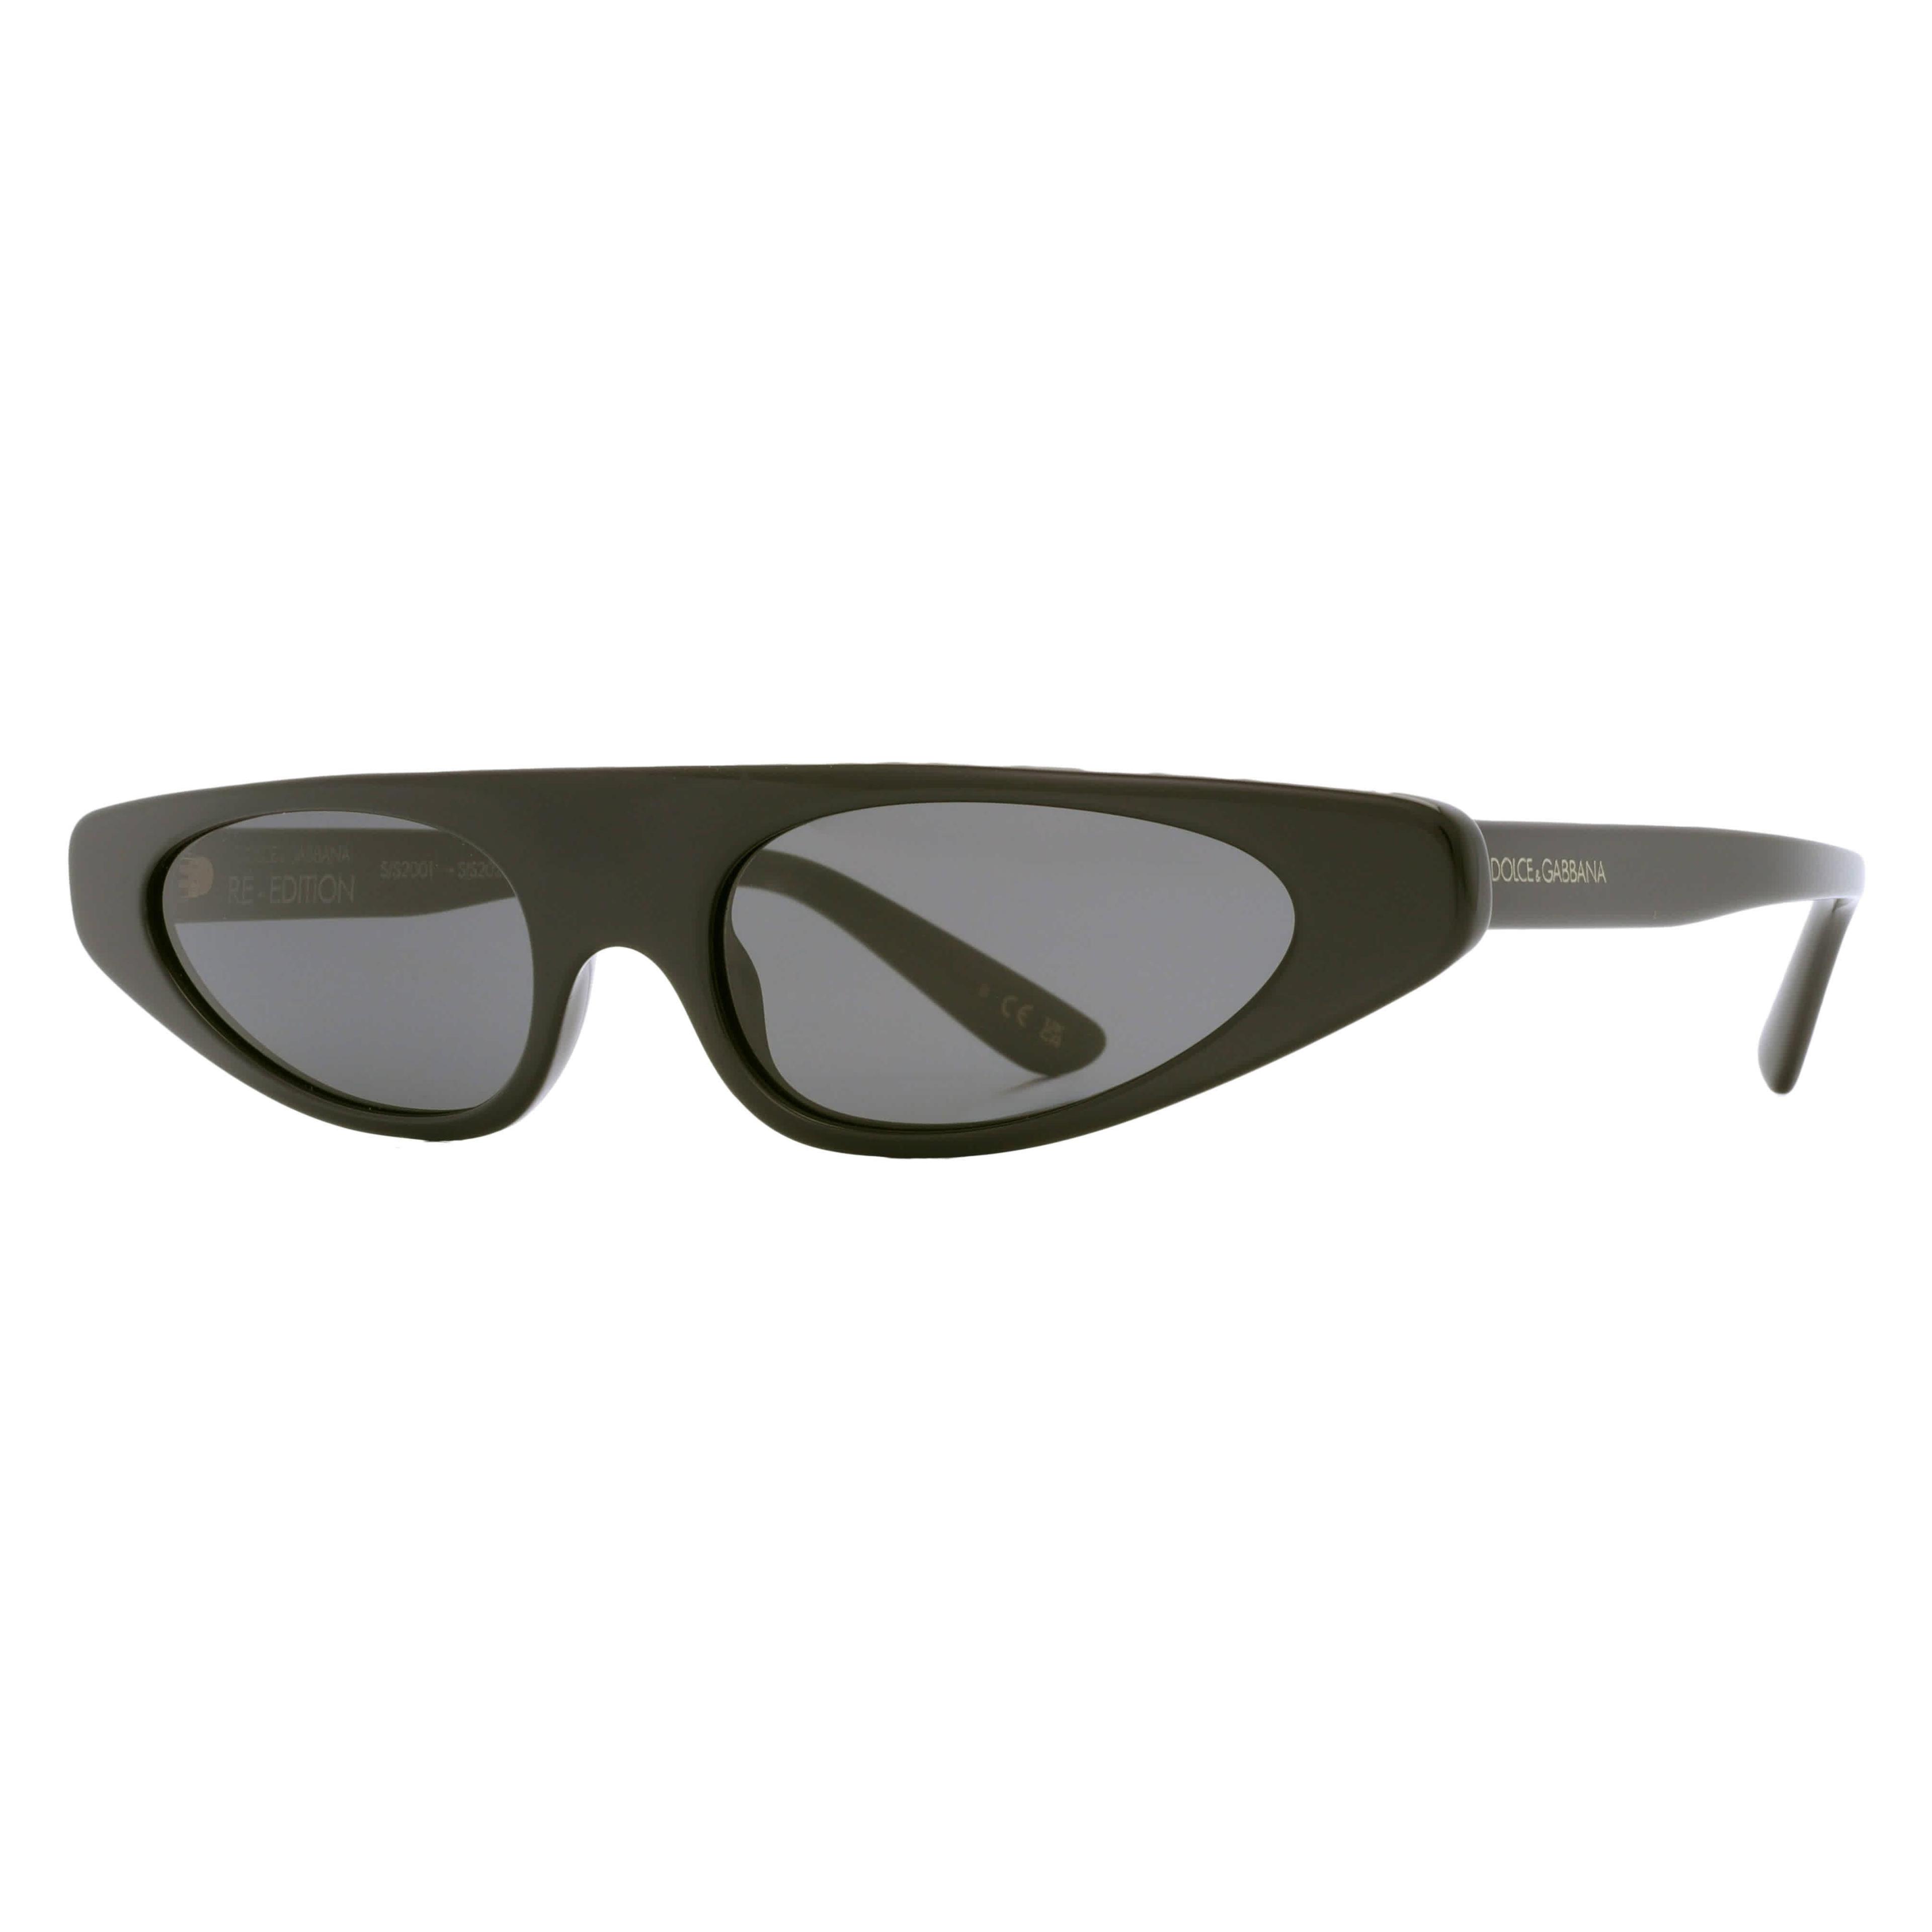 Dolce & Gabbana 52mm Rectangular Sunglasses Product Image